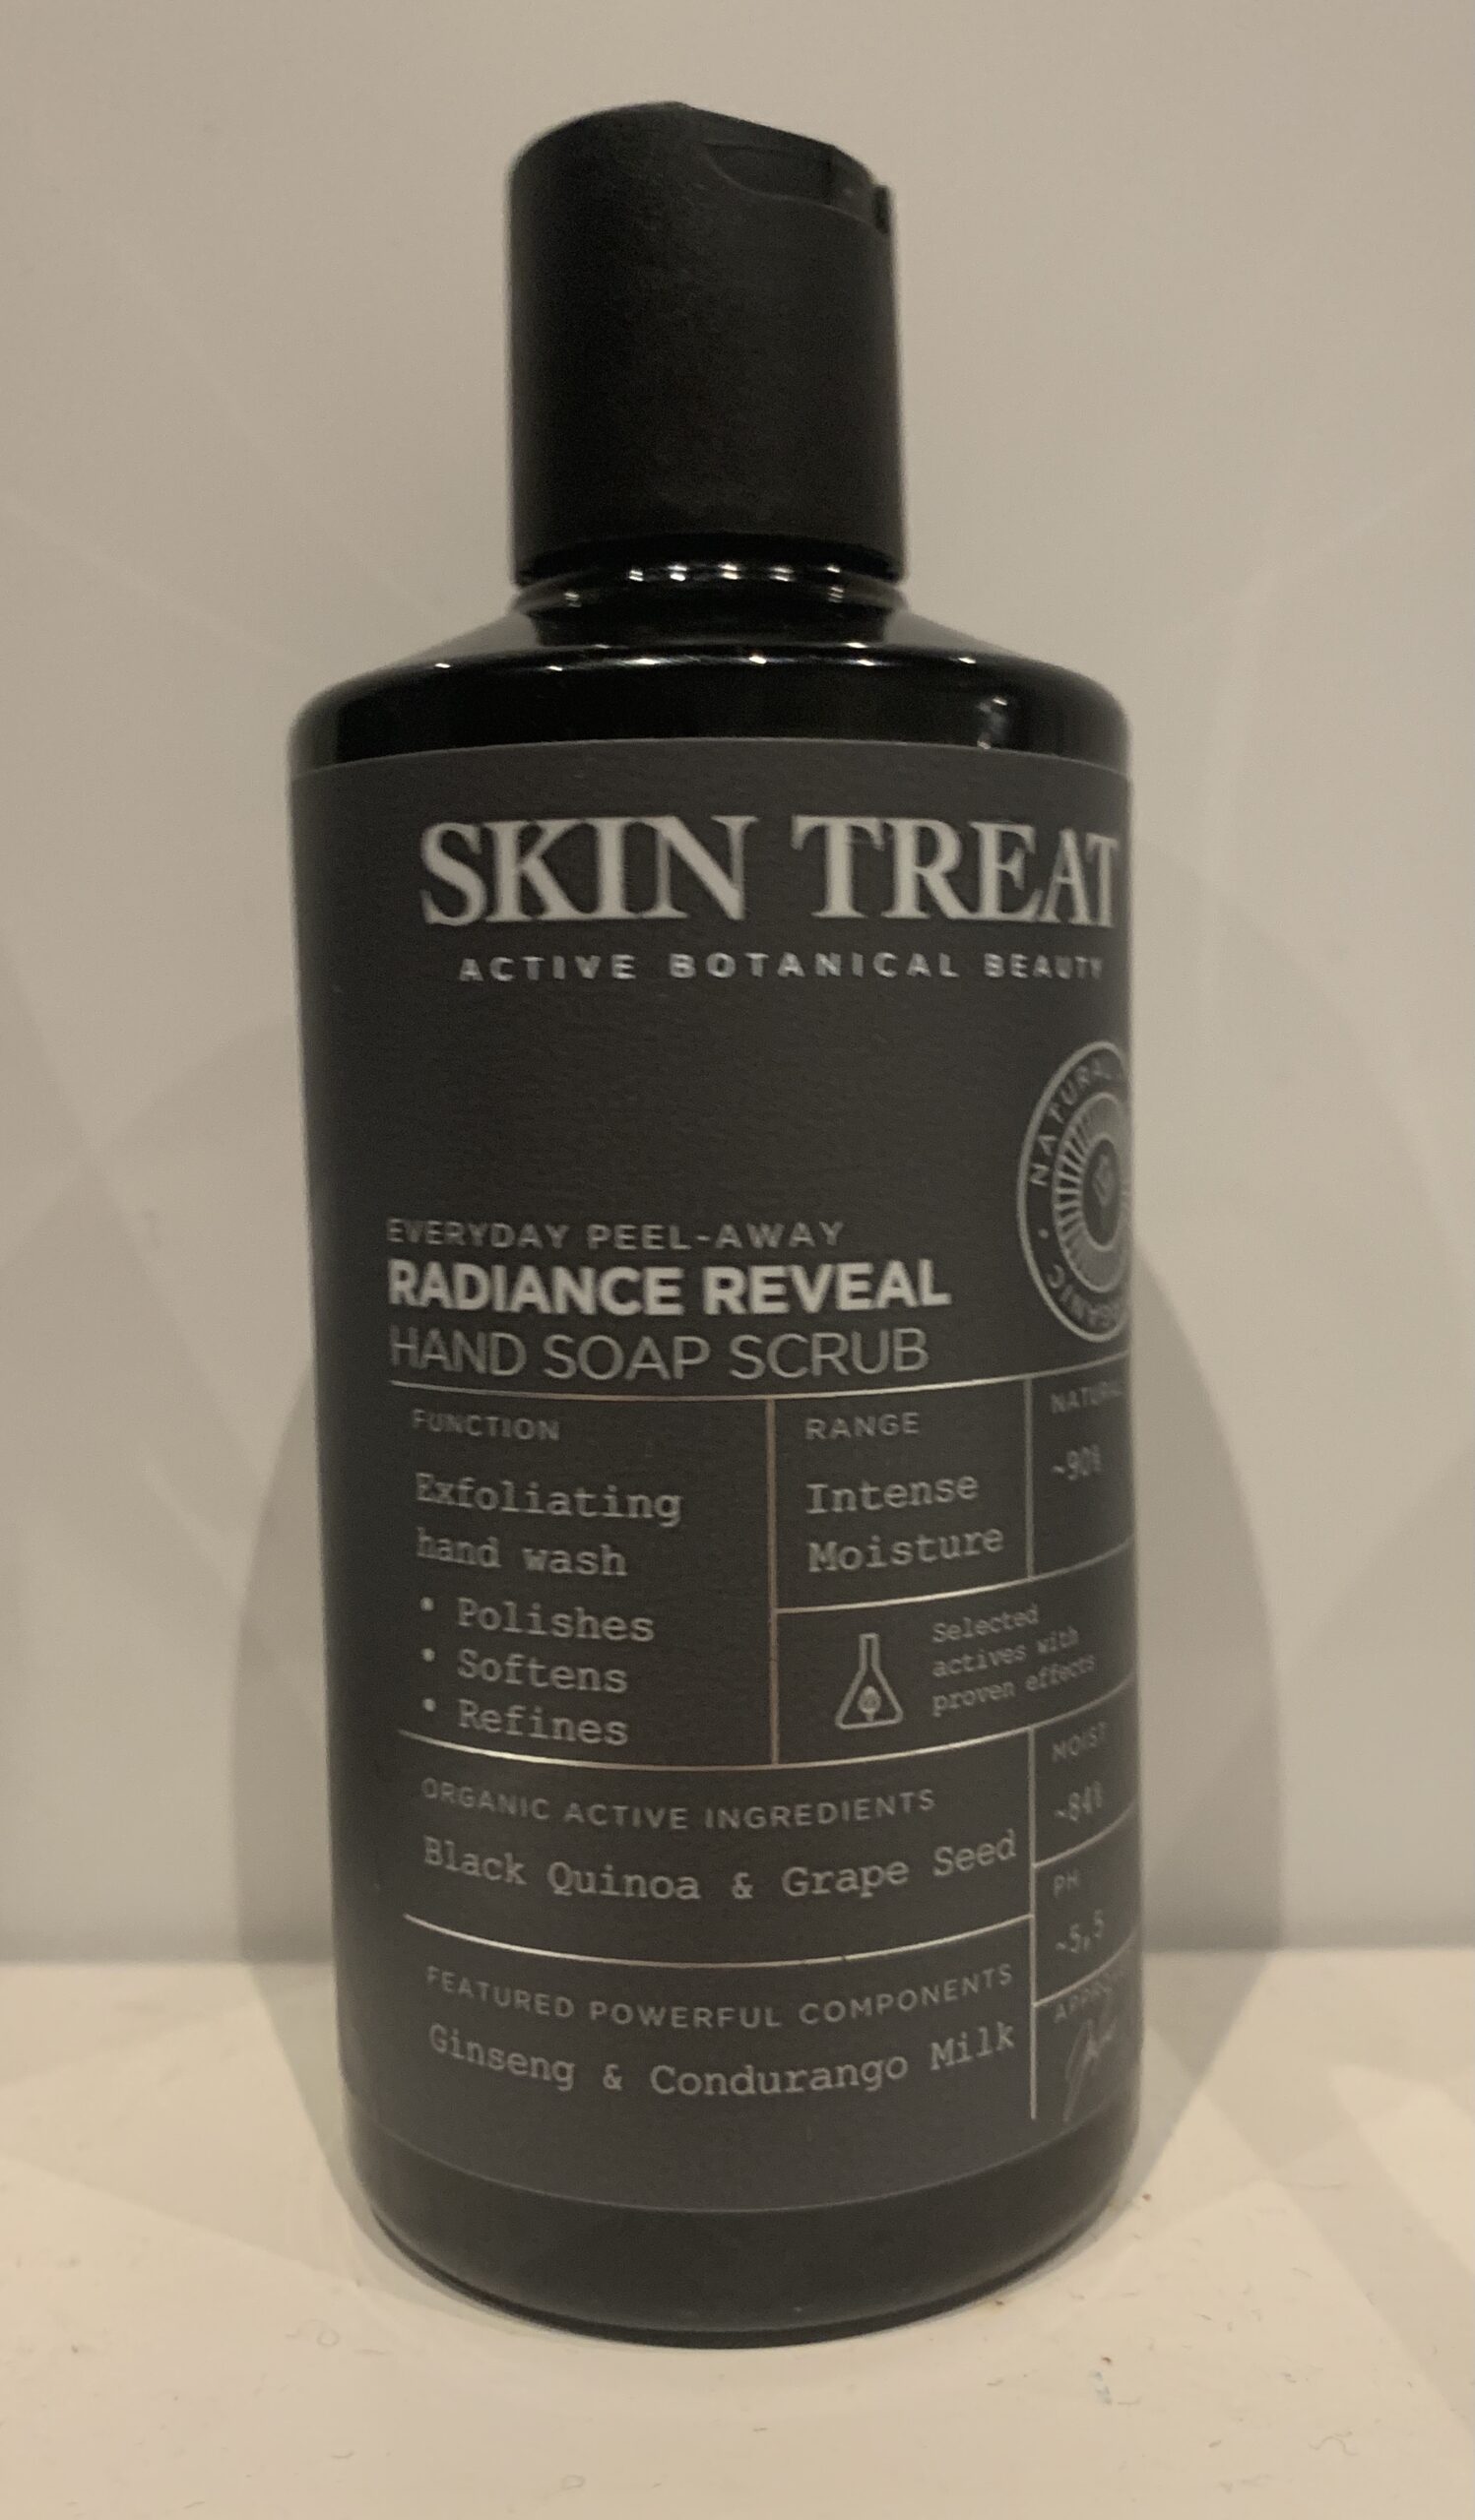 Skin Treat radiance reveal hand soap scrub